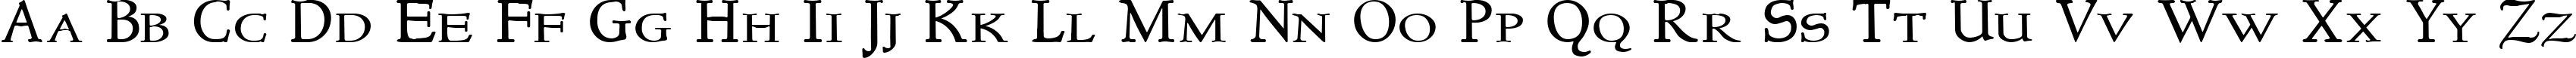 Пример написания английского алфавита шрифтом NewStyleSmallCaps